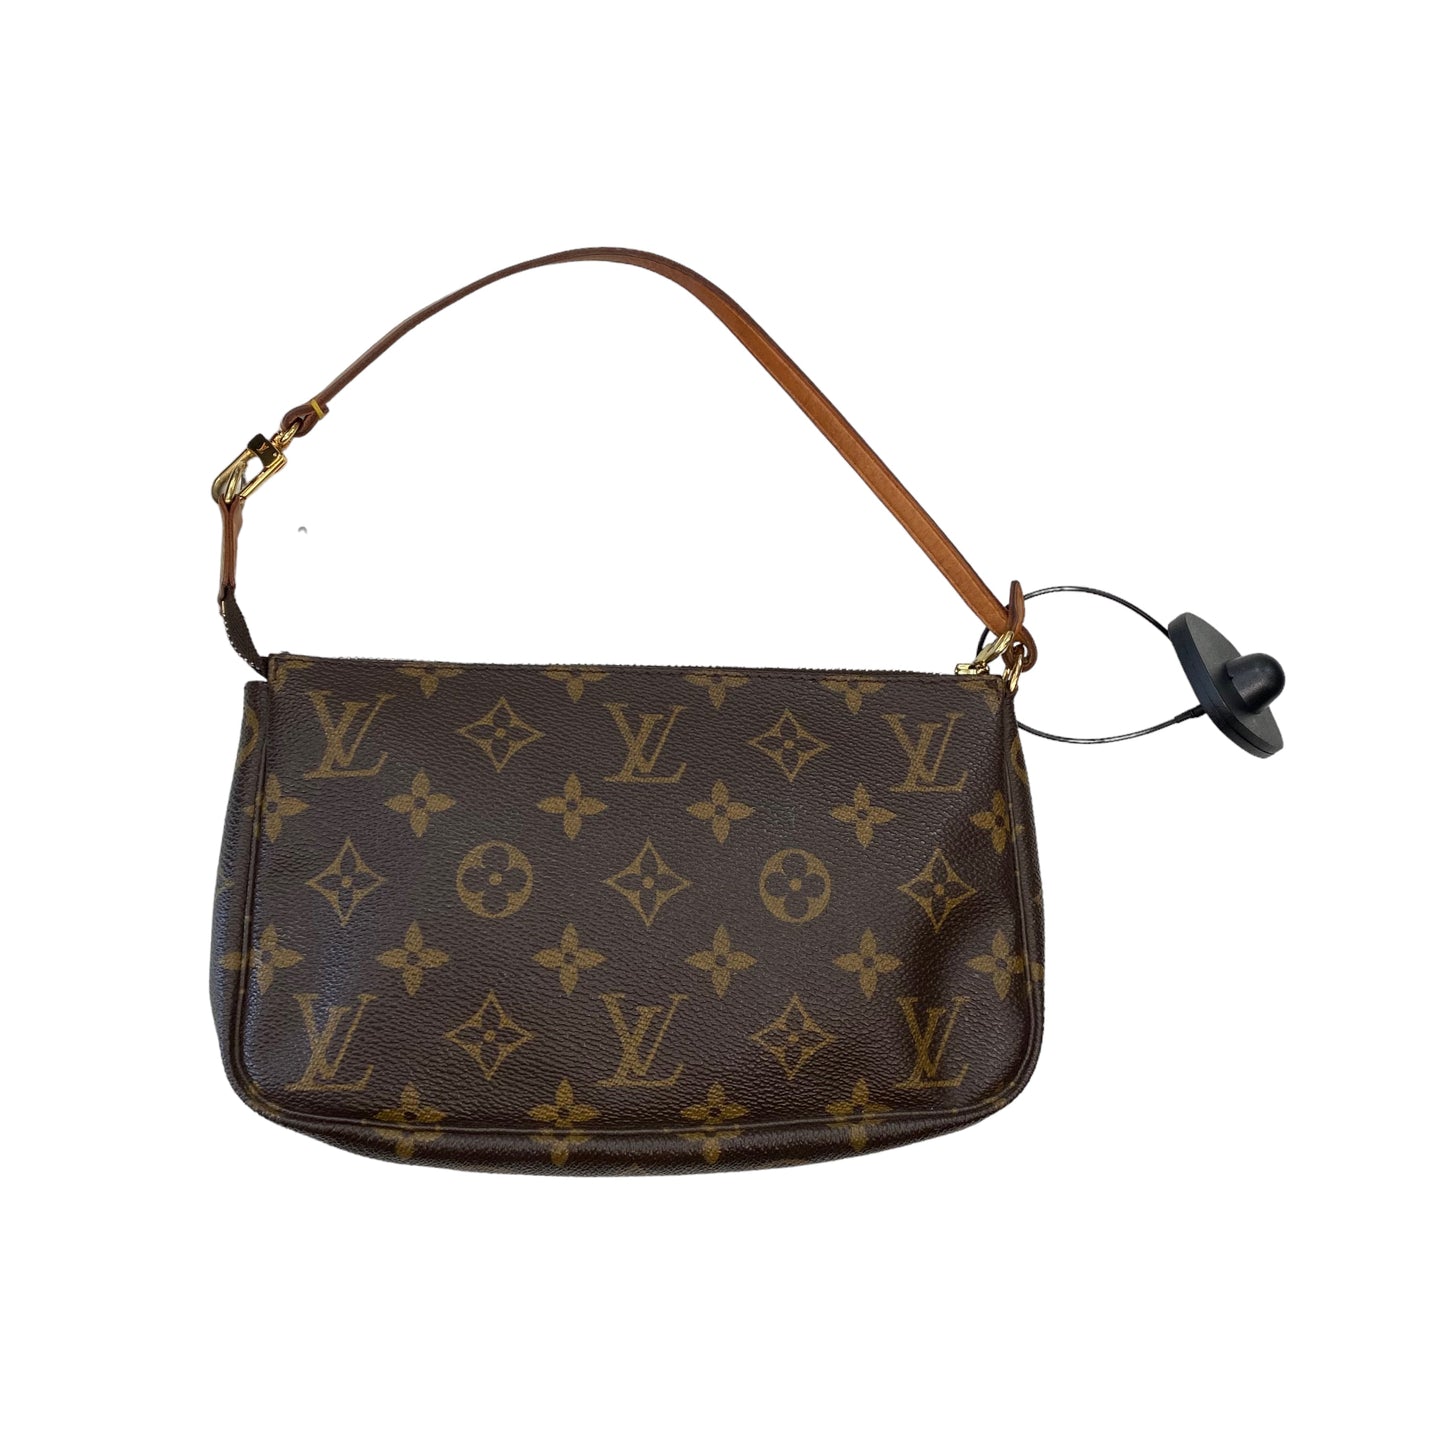 Handbag Luxury Designer Louis Vuitton, Size Small